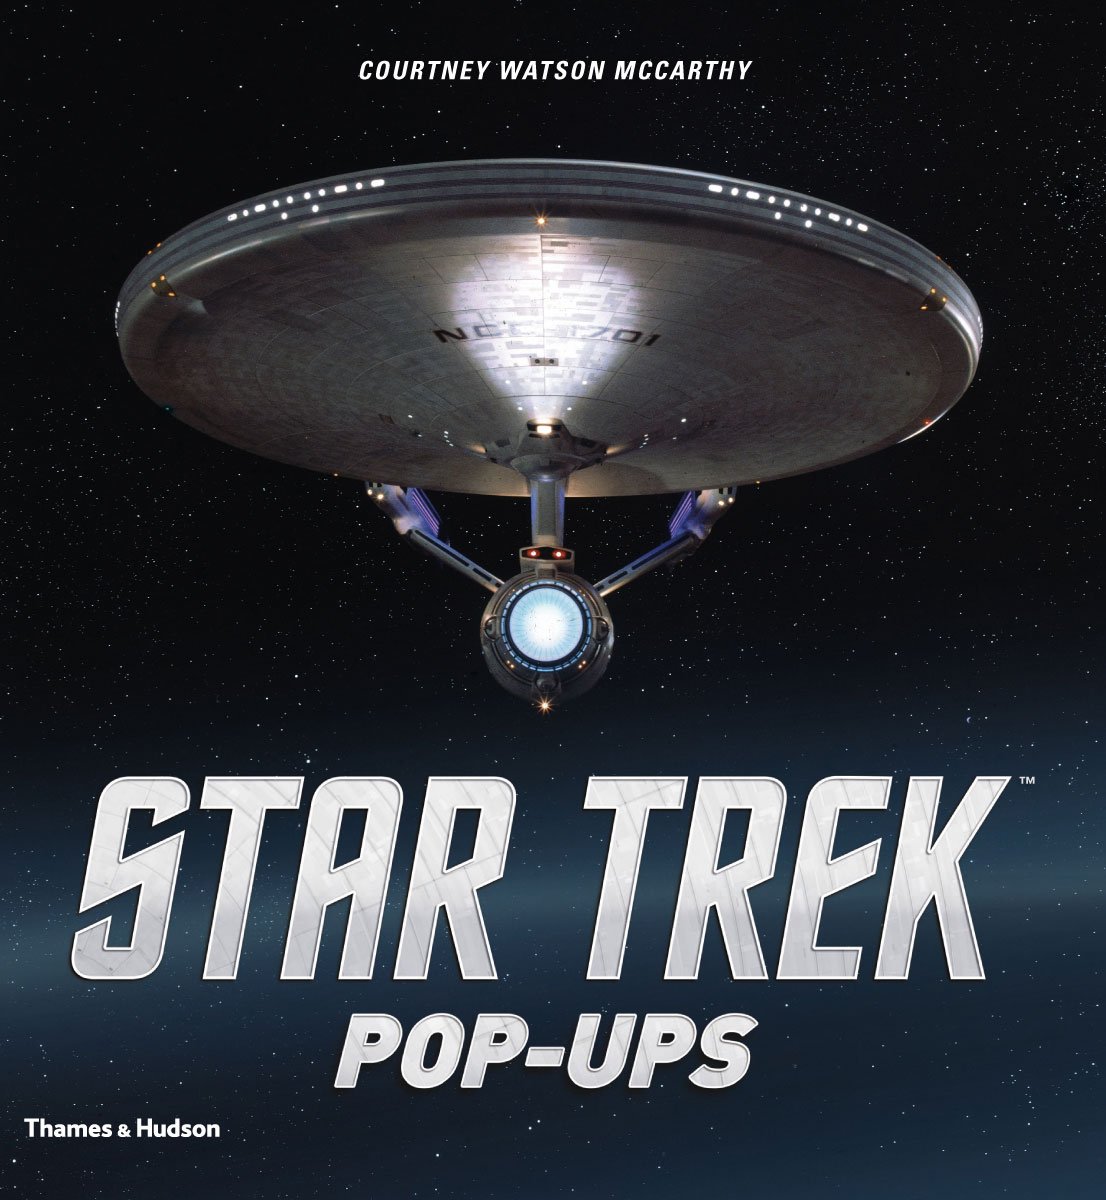 “Star Trek Pop-Ups” Review by The Trek Collective